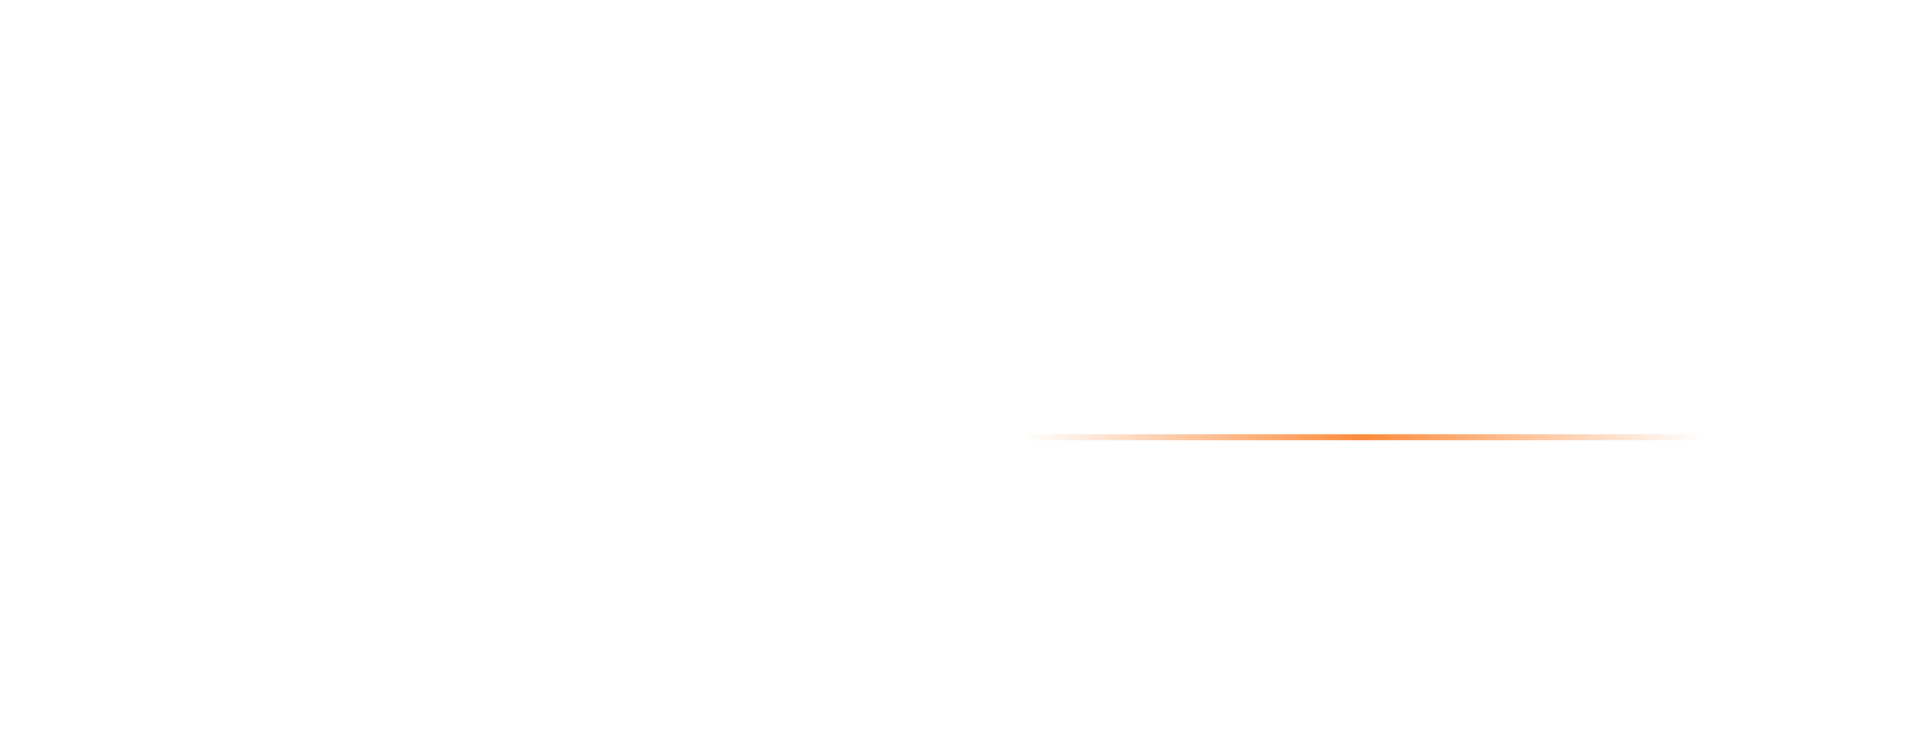 MapTheNews